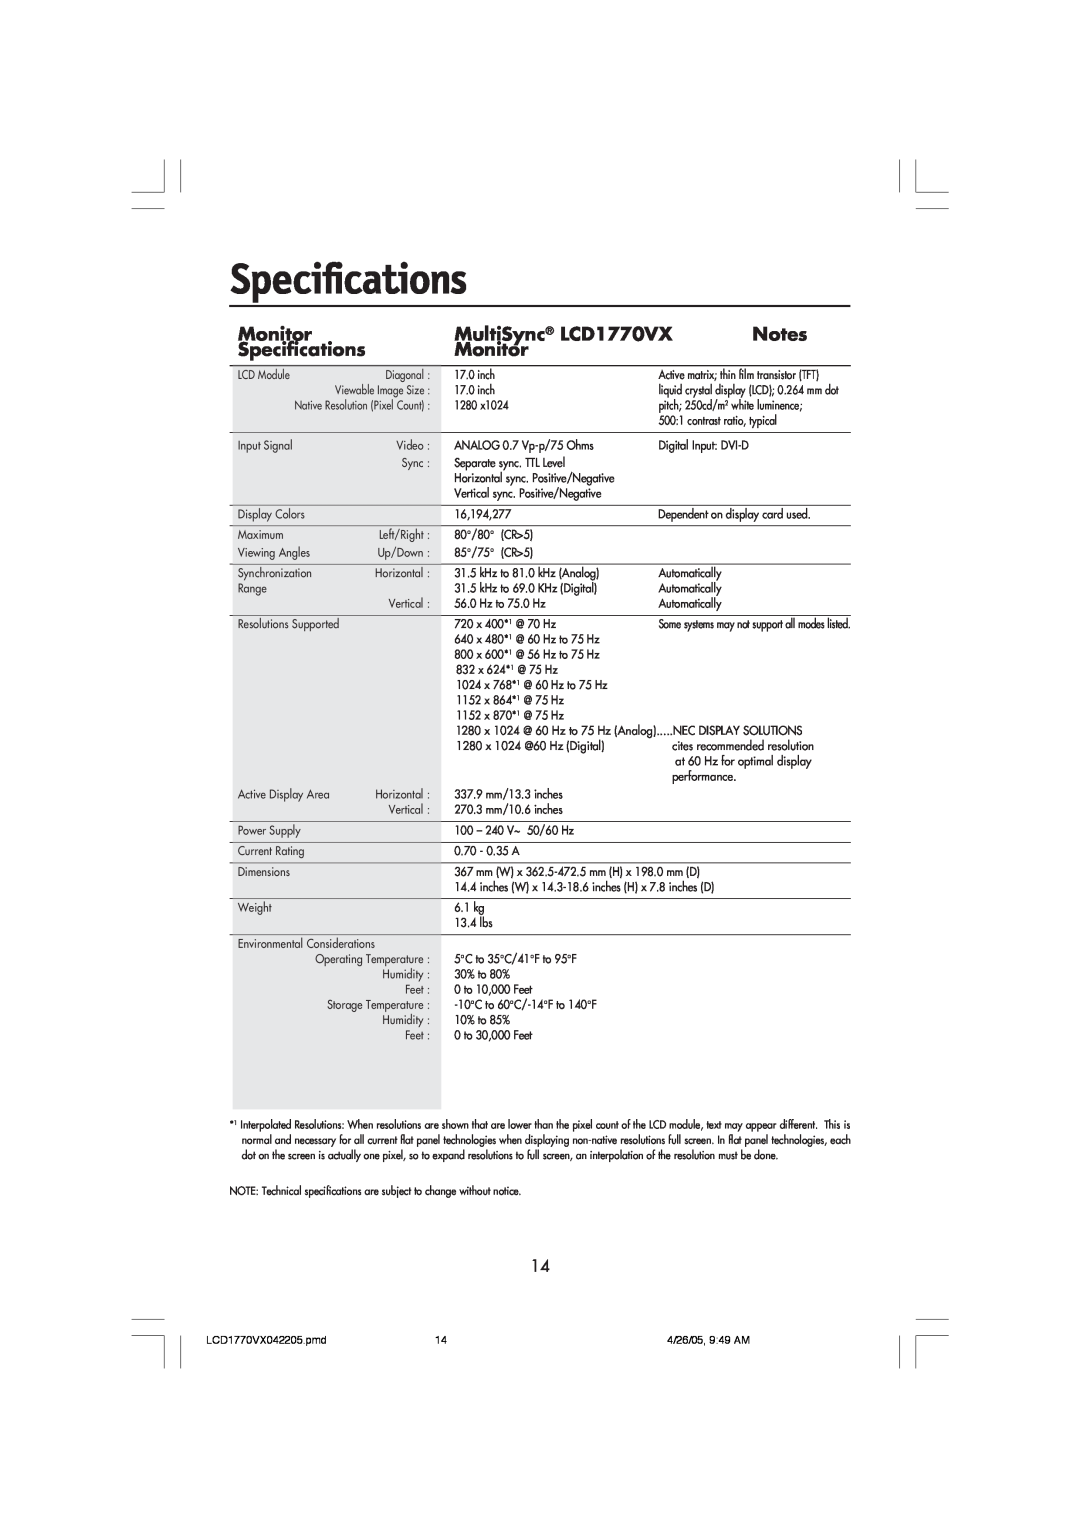 NEC user manual Specifications, Monitor, MultiSync LCD1770VX 